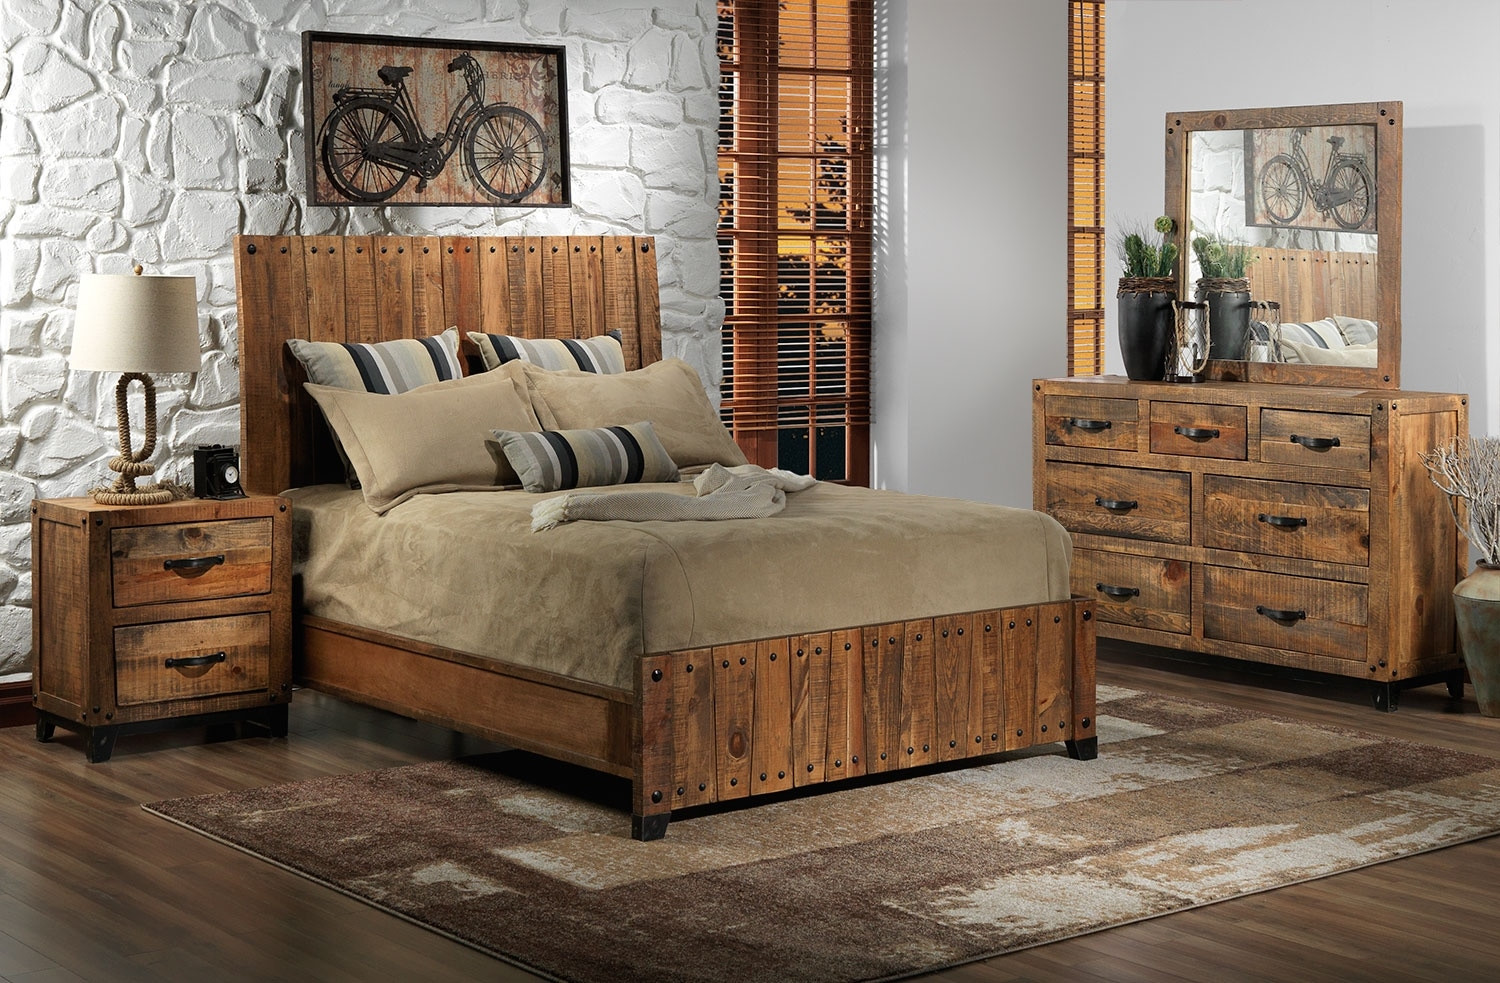 Rustic Bedroom Furniture Sets
 Maya Dresser Rustic Pine